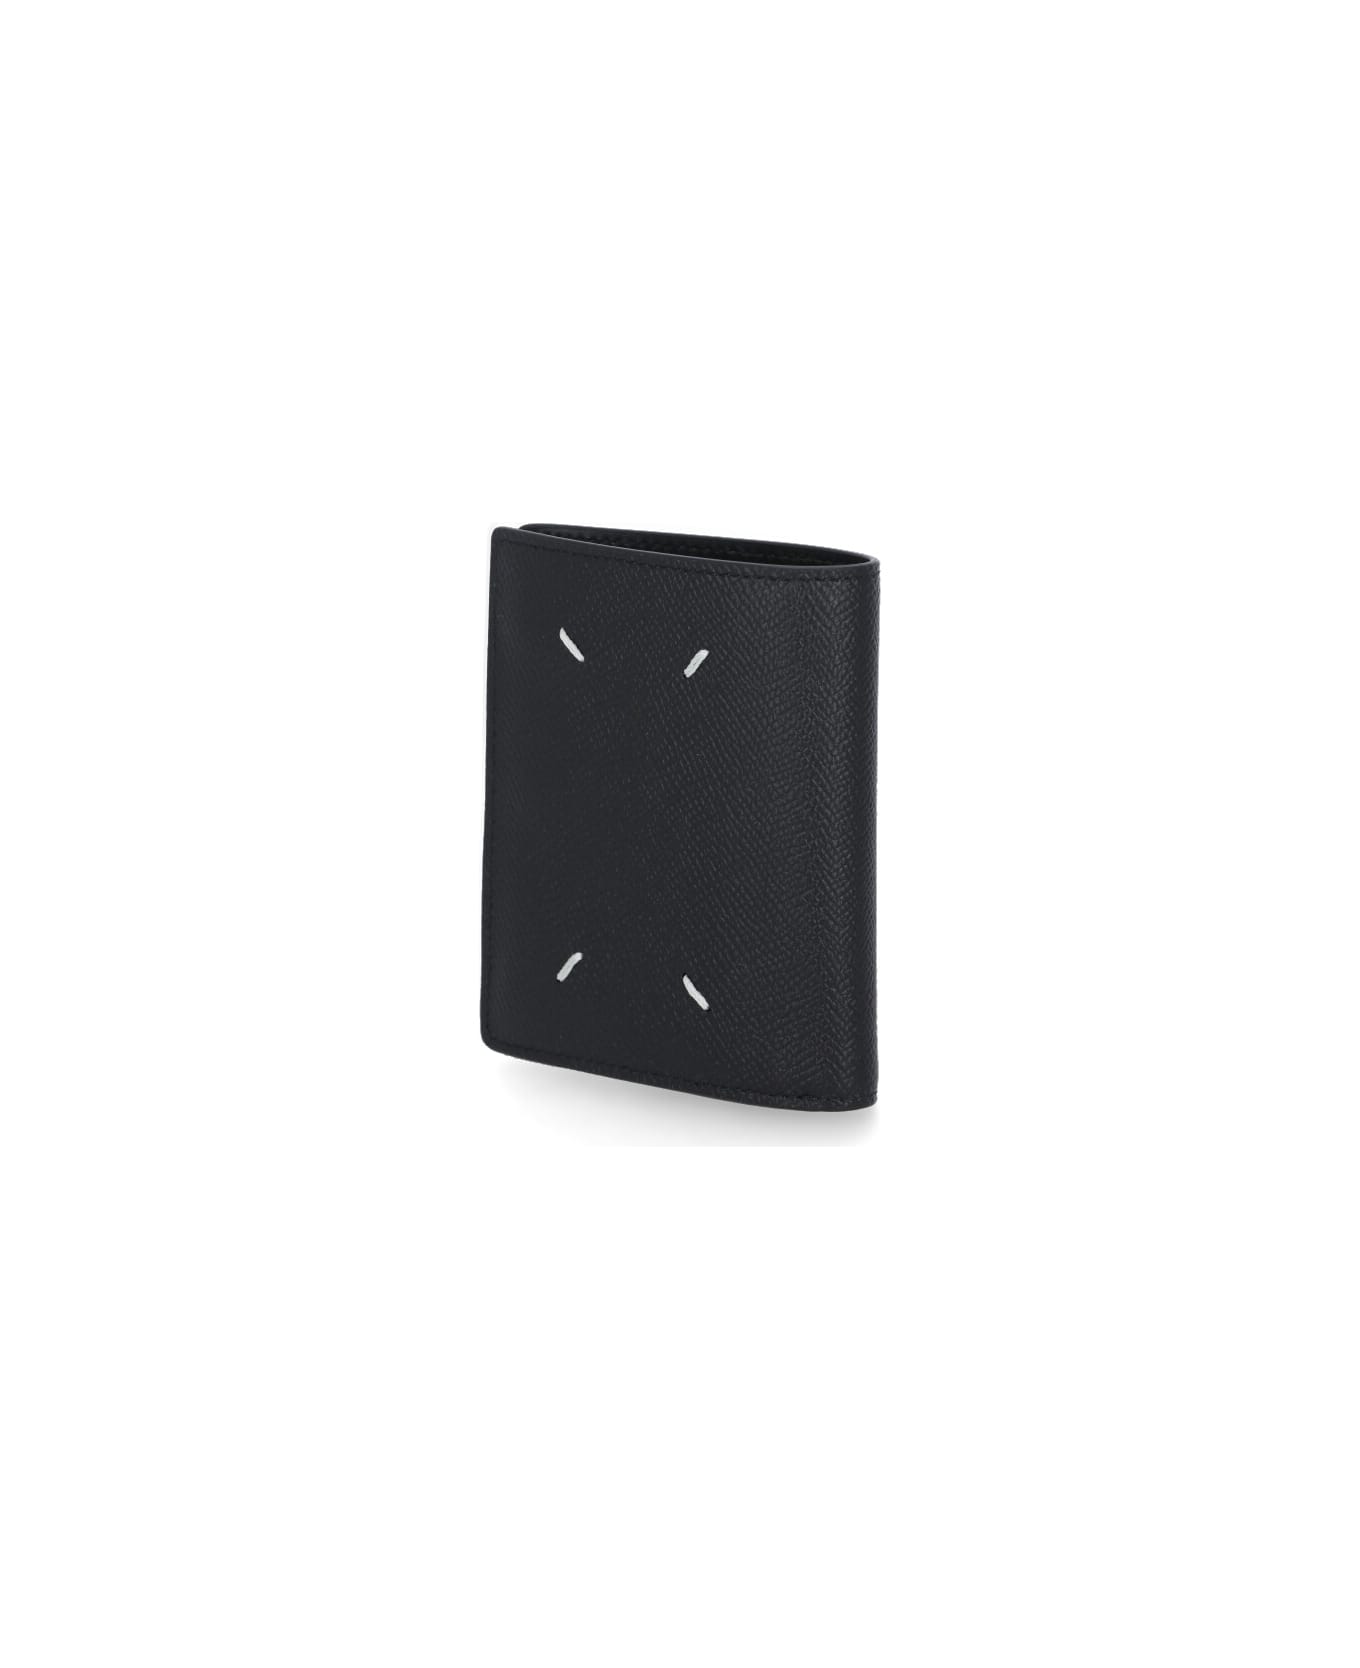 Maison Margiela Bi-fold Wallet - Black 財布